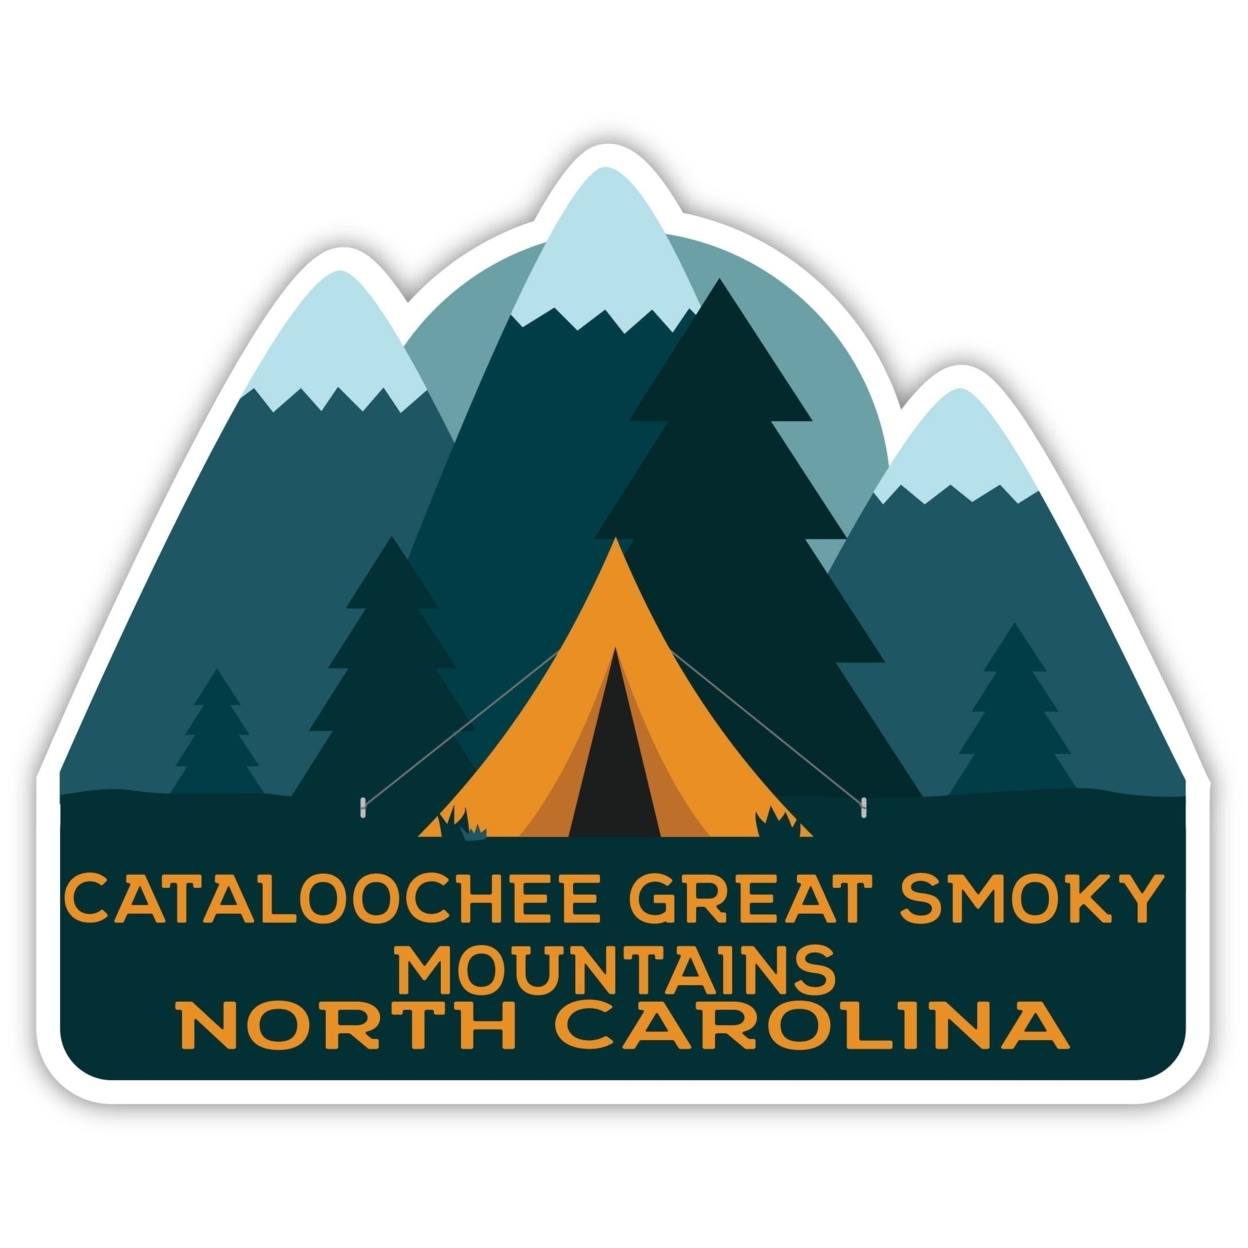 Cataloochee Great Smoky Mountains North Carolina Souvenir Decorative Stickers (Choose Theme And Size) - Single Unit, 4-Inch, Tent